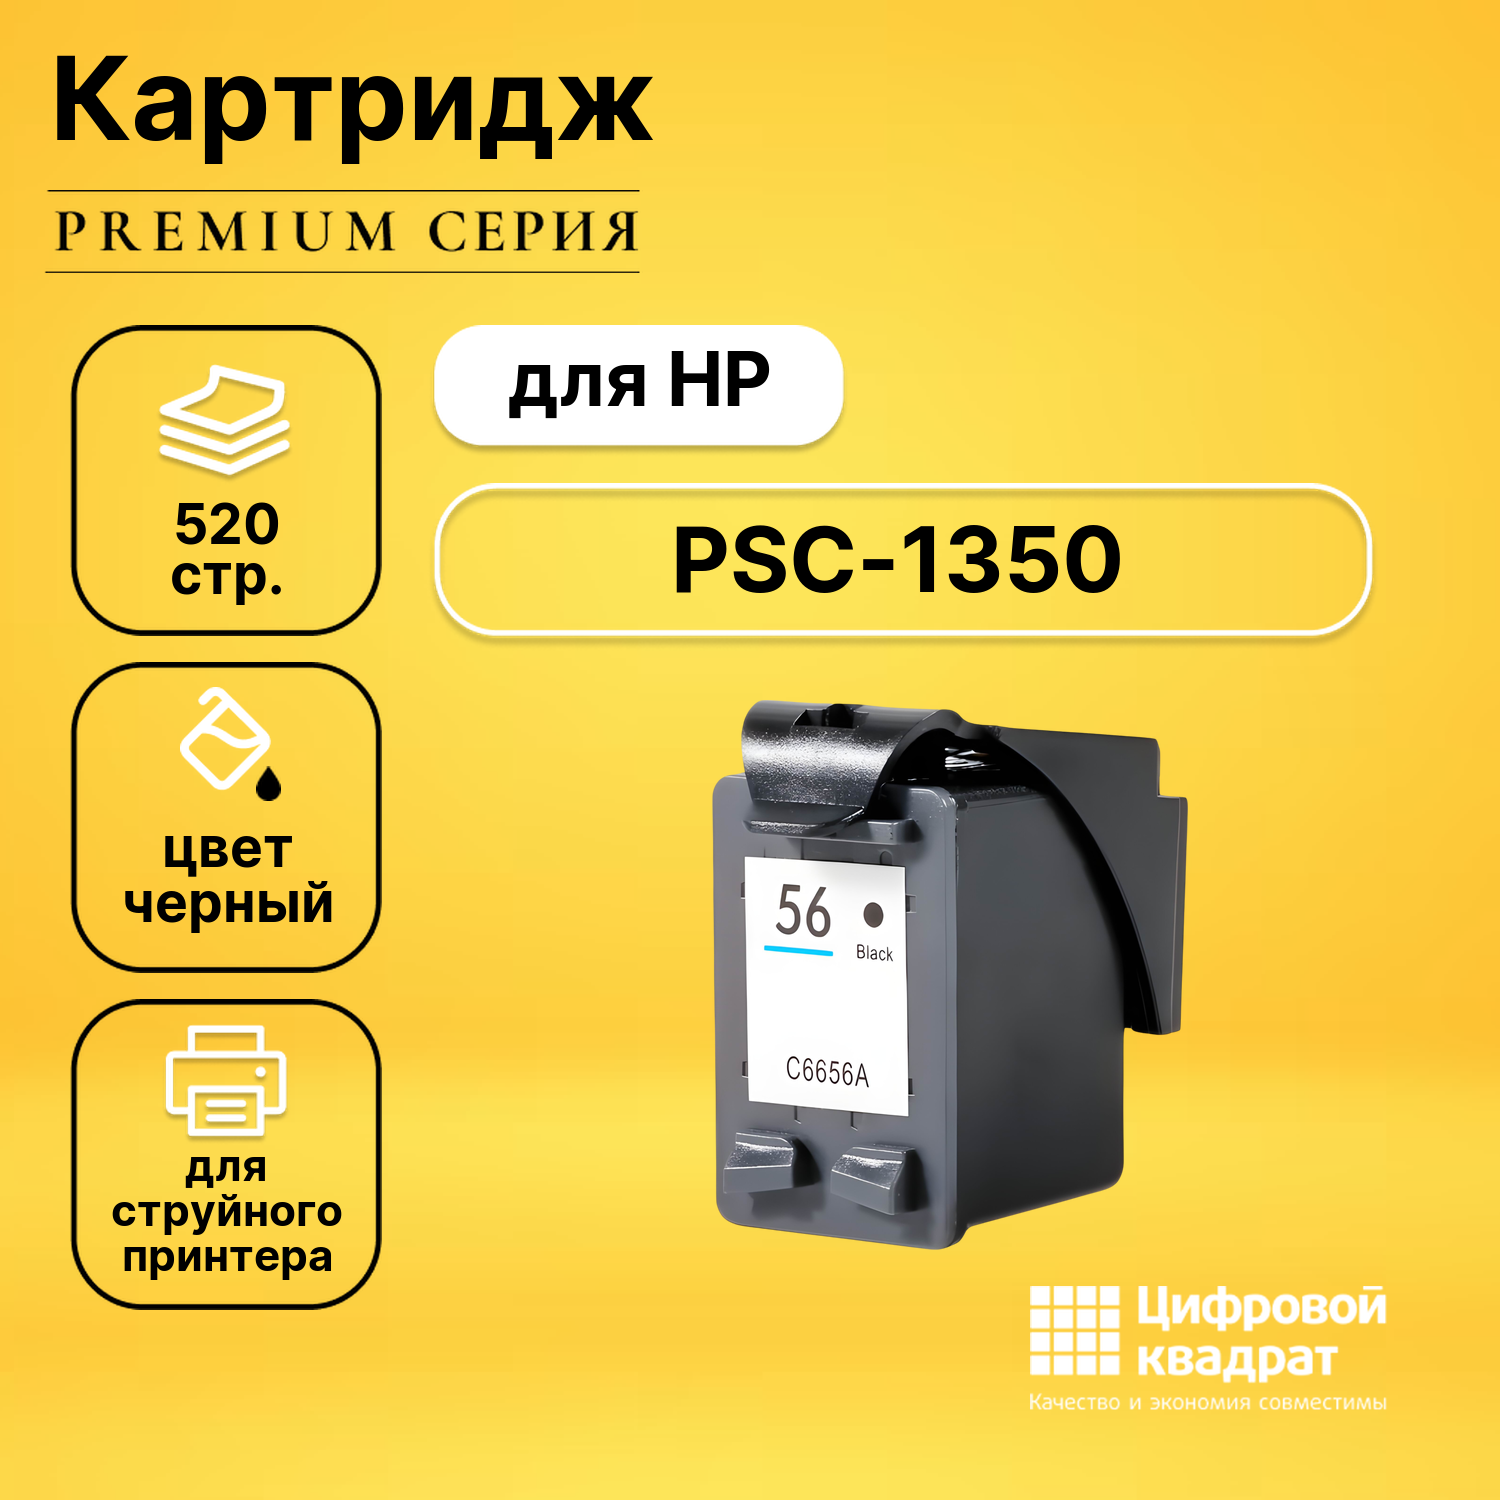 Картридж DS для HP PSC-1350 совместимый